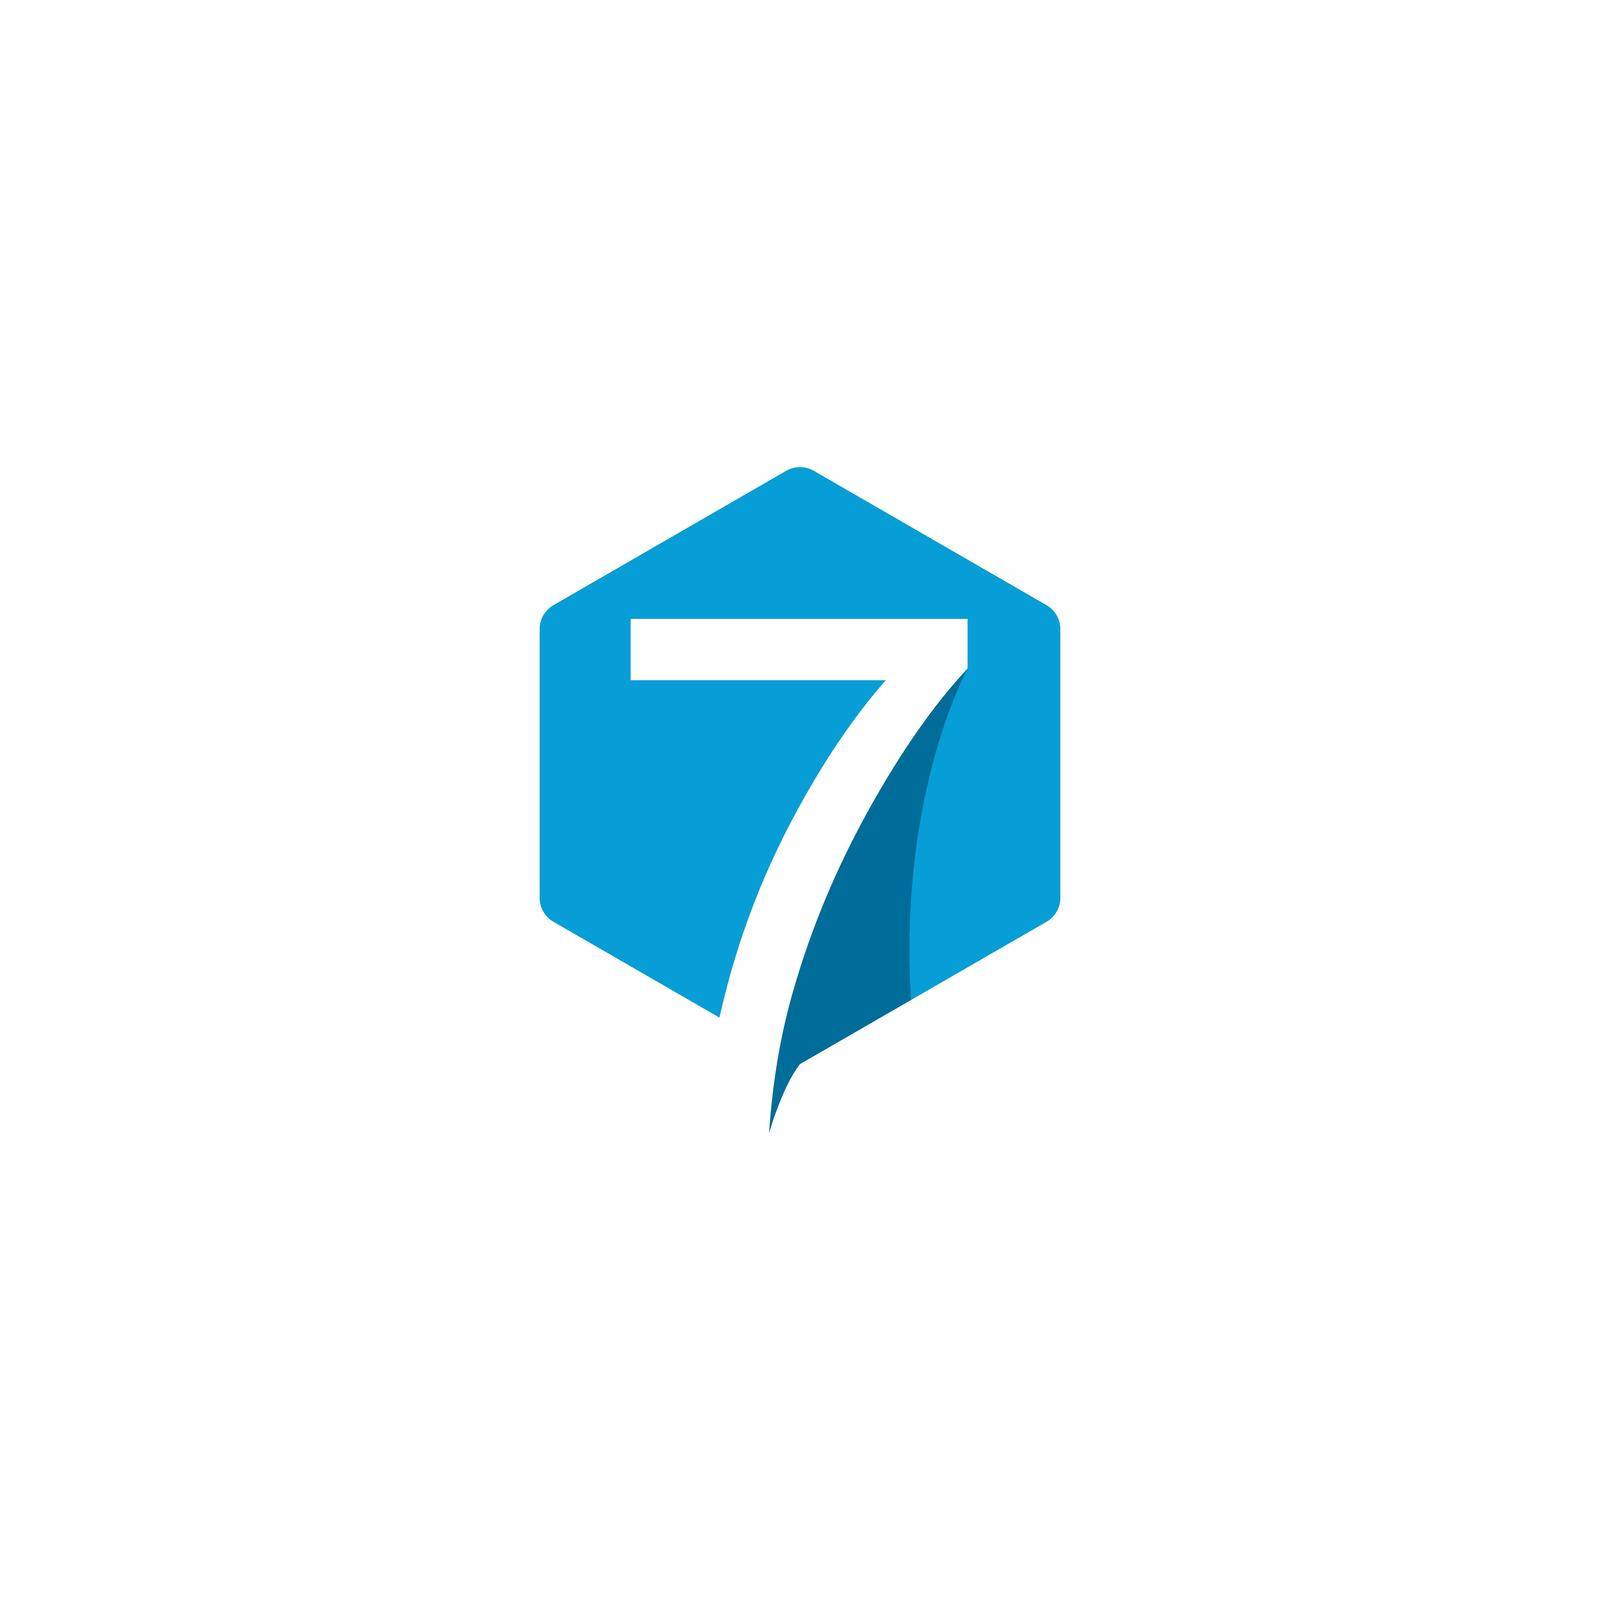 sign of number 7 logo vector icon illustration design